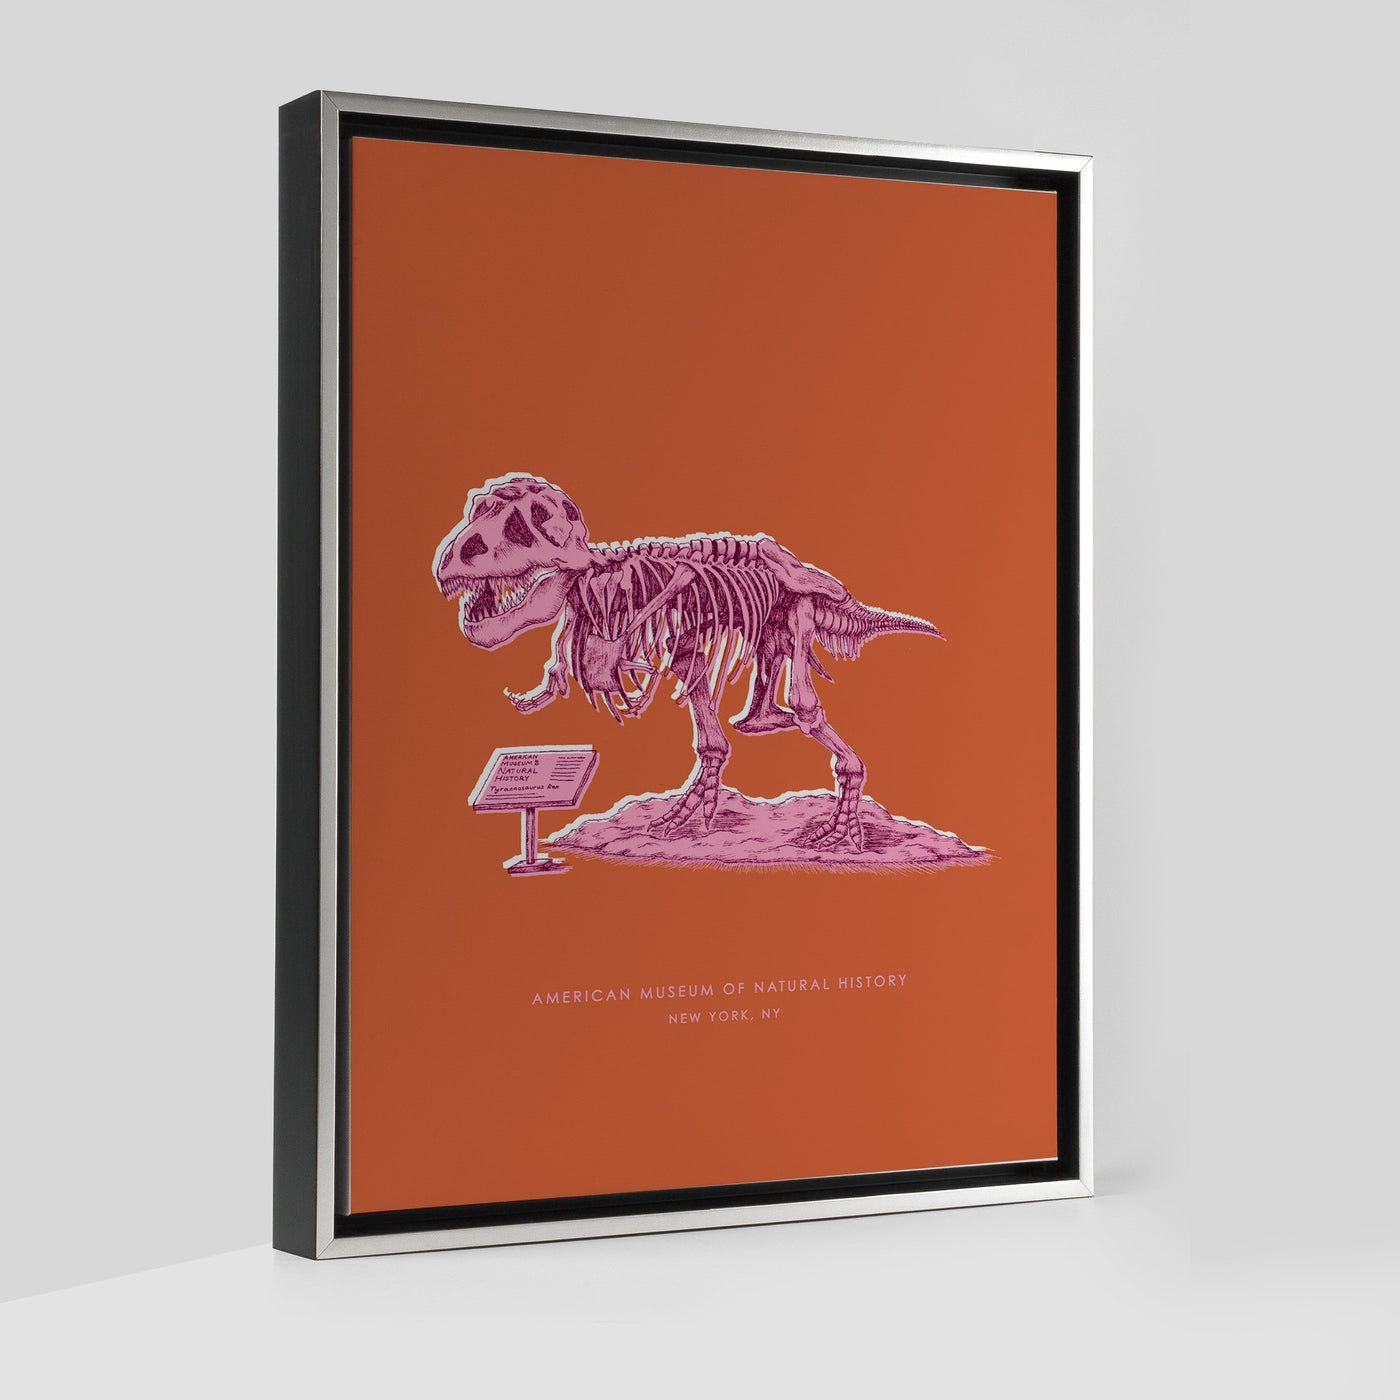 Gallery Prints Orange Canvas / 8x10 / Silver New York Dinosaur Print Katie Kime